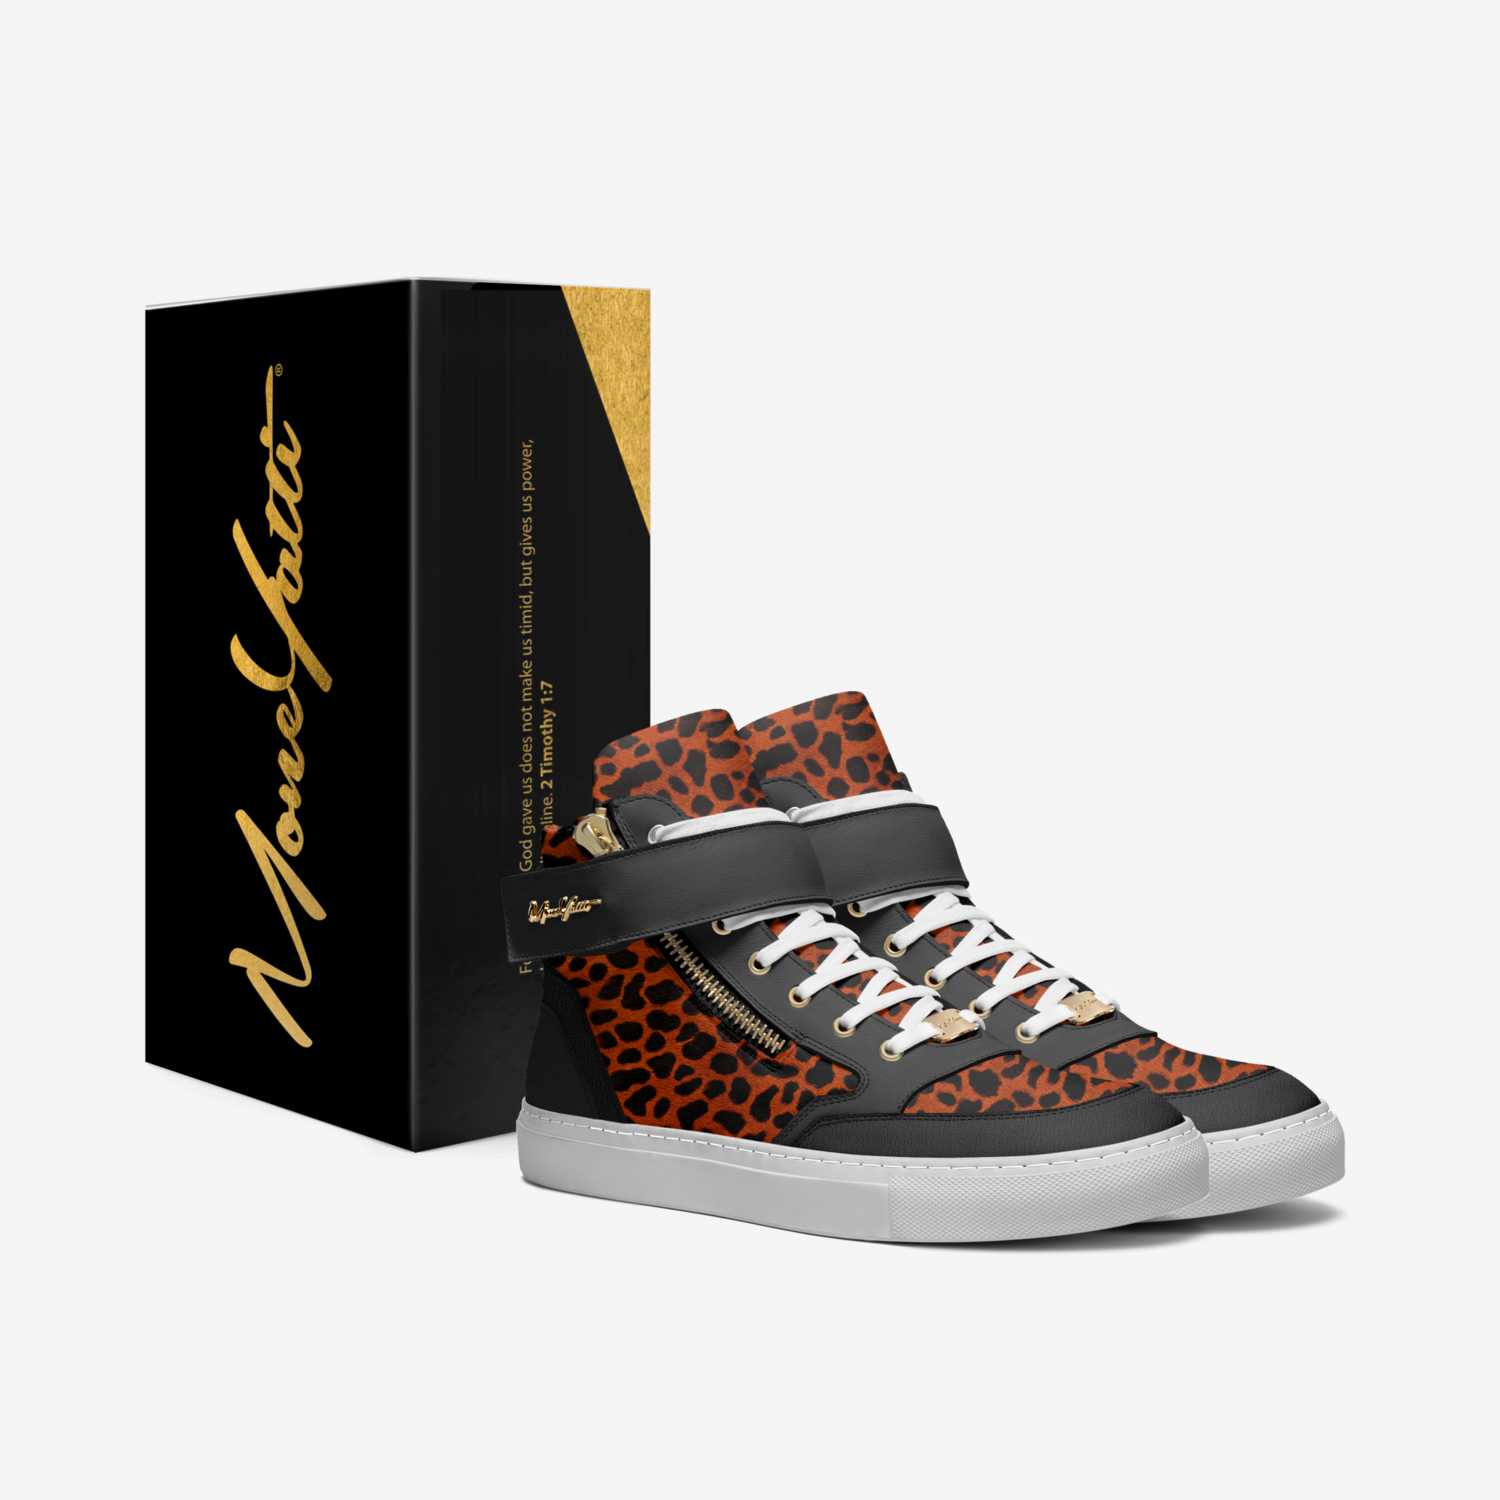 MONEYATTI CLS6W custom made in Italy shoes by Moneyatti Brand | Box view